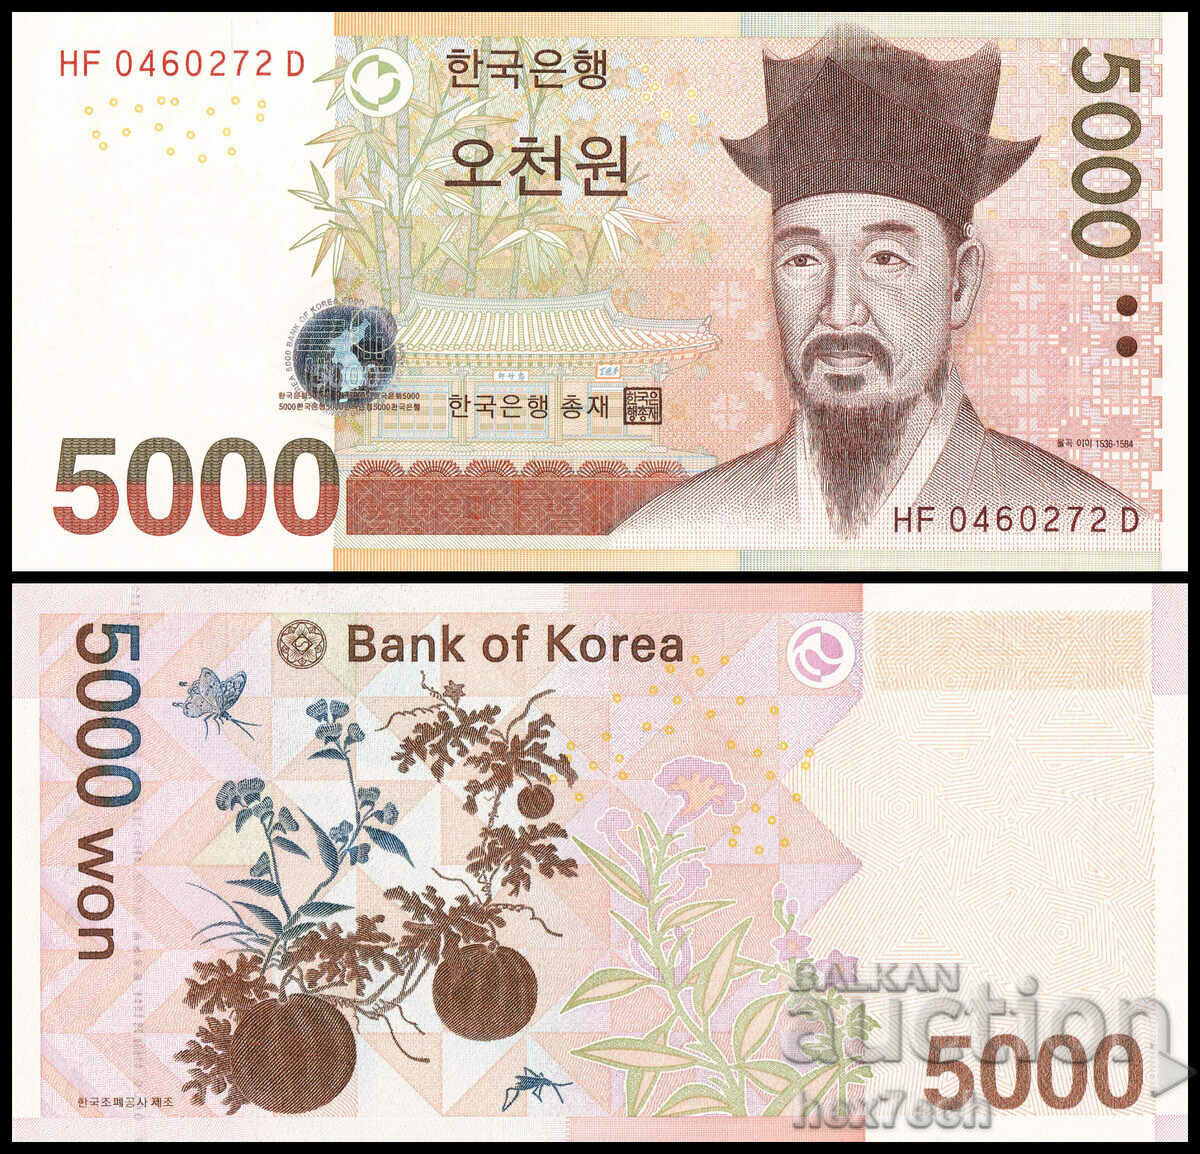 ❤️ ⭐ South Korea 2006 5000 won UNC new ⭐ ❤️